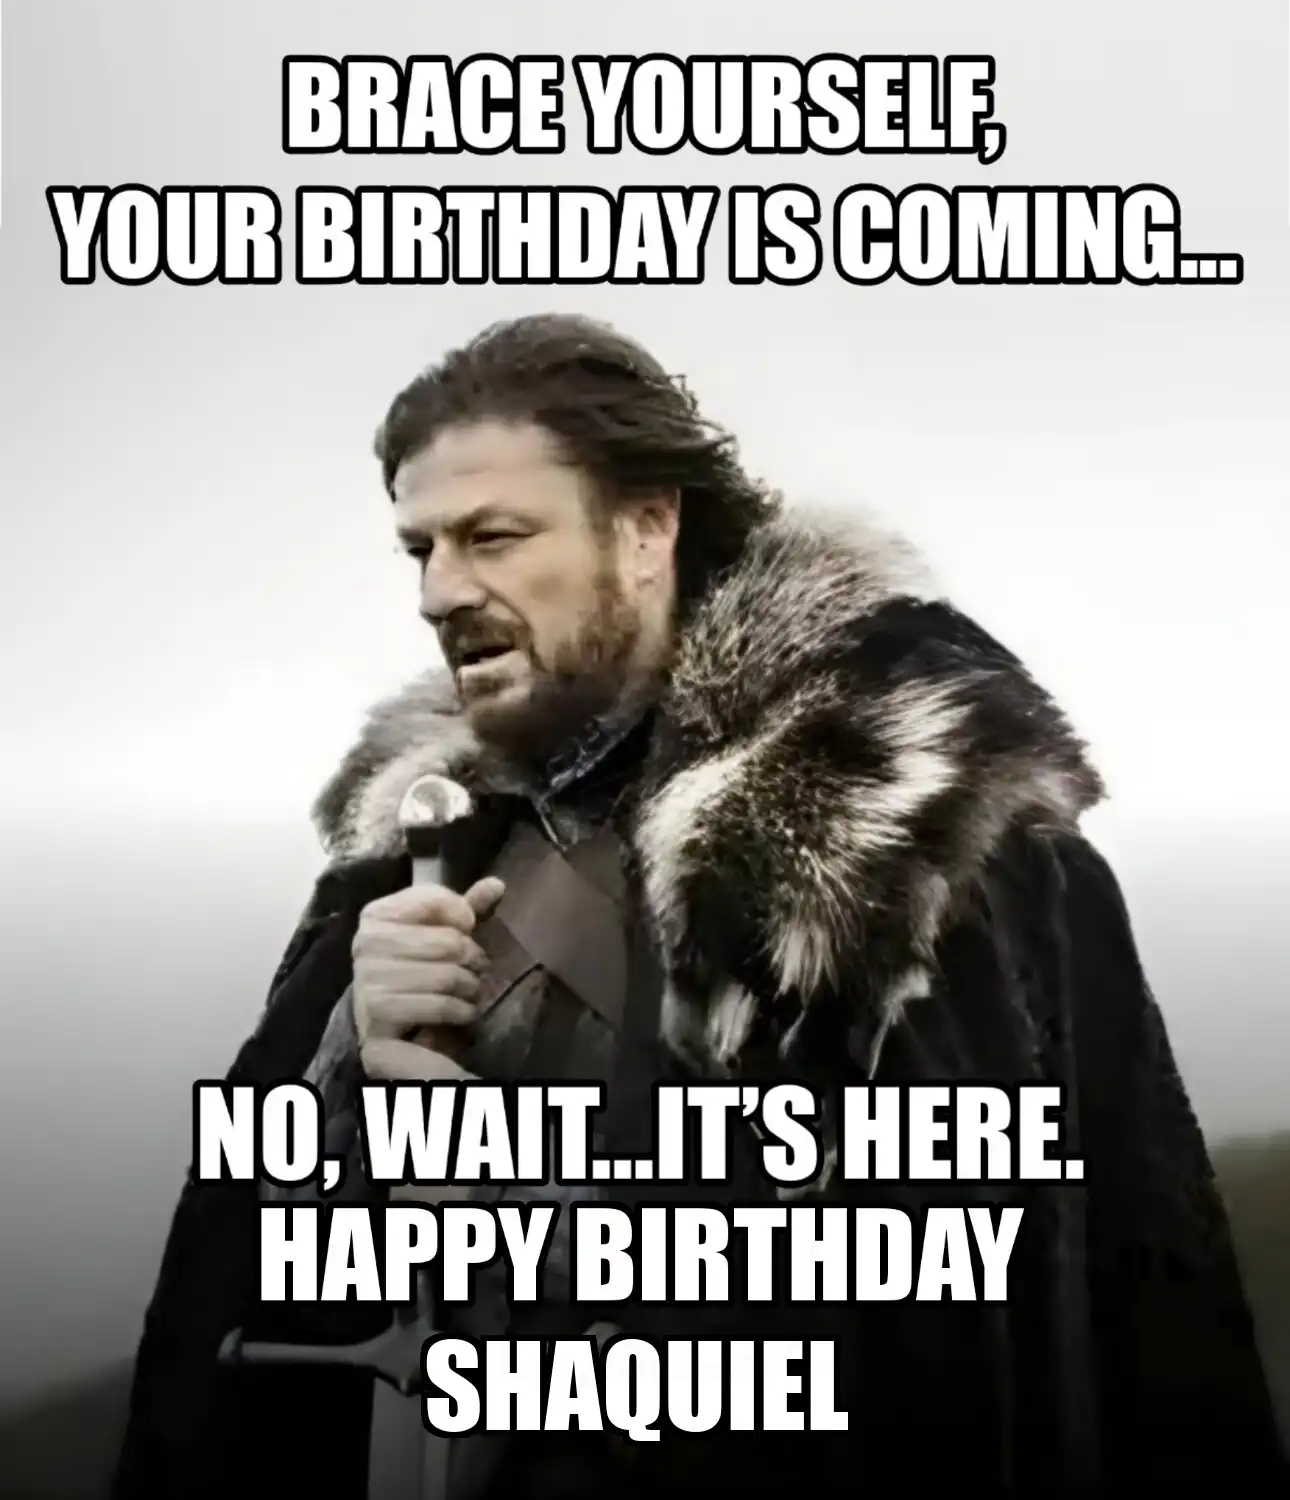 Happy Birthday Shaquiel Brace Yourself Your Birthday Is Coming Meme